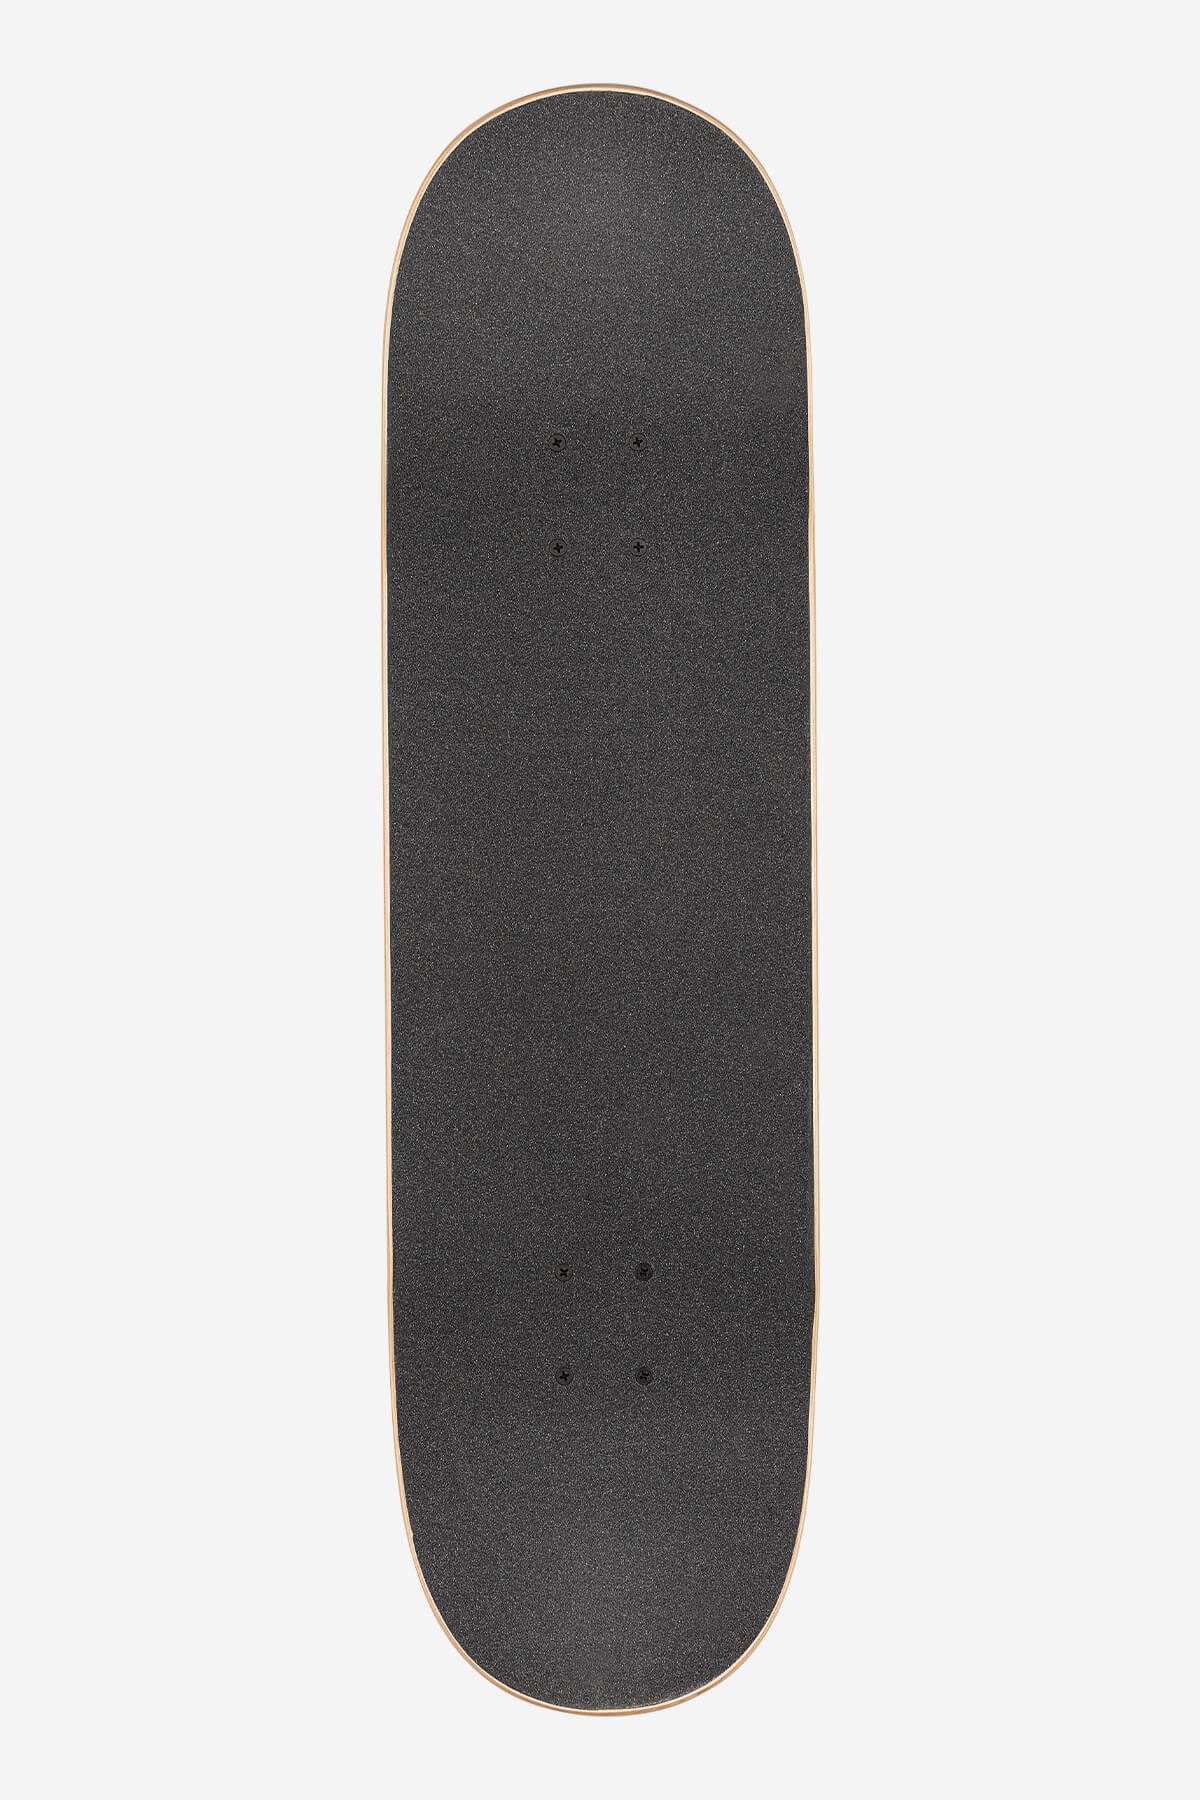 Globe - G1 Stack - Lone Palm - 8.0" Compleet Skateboard